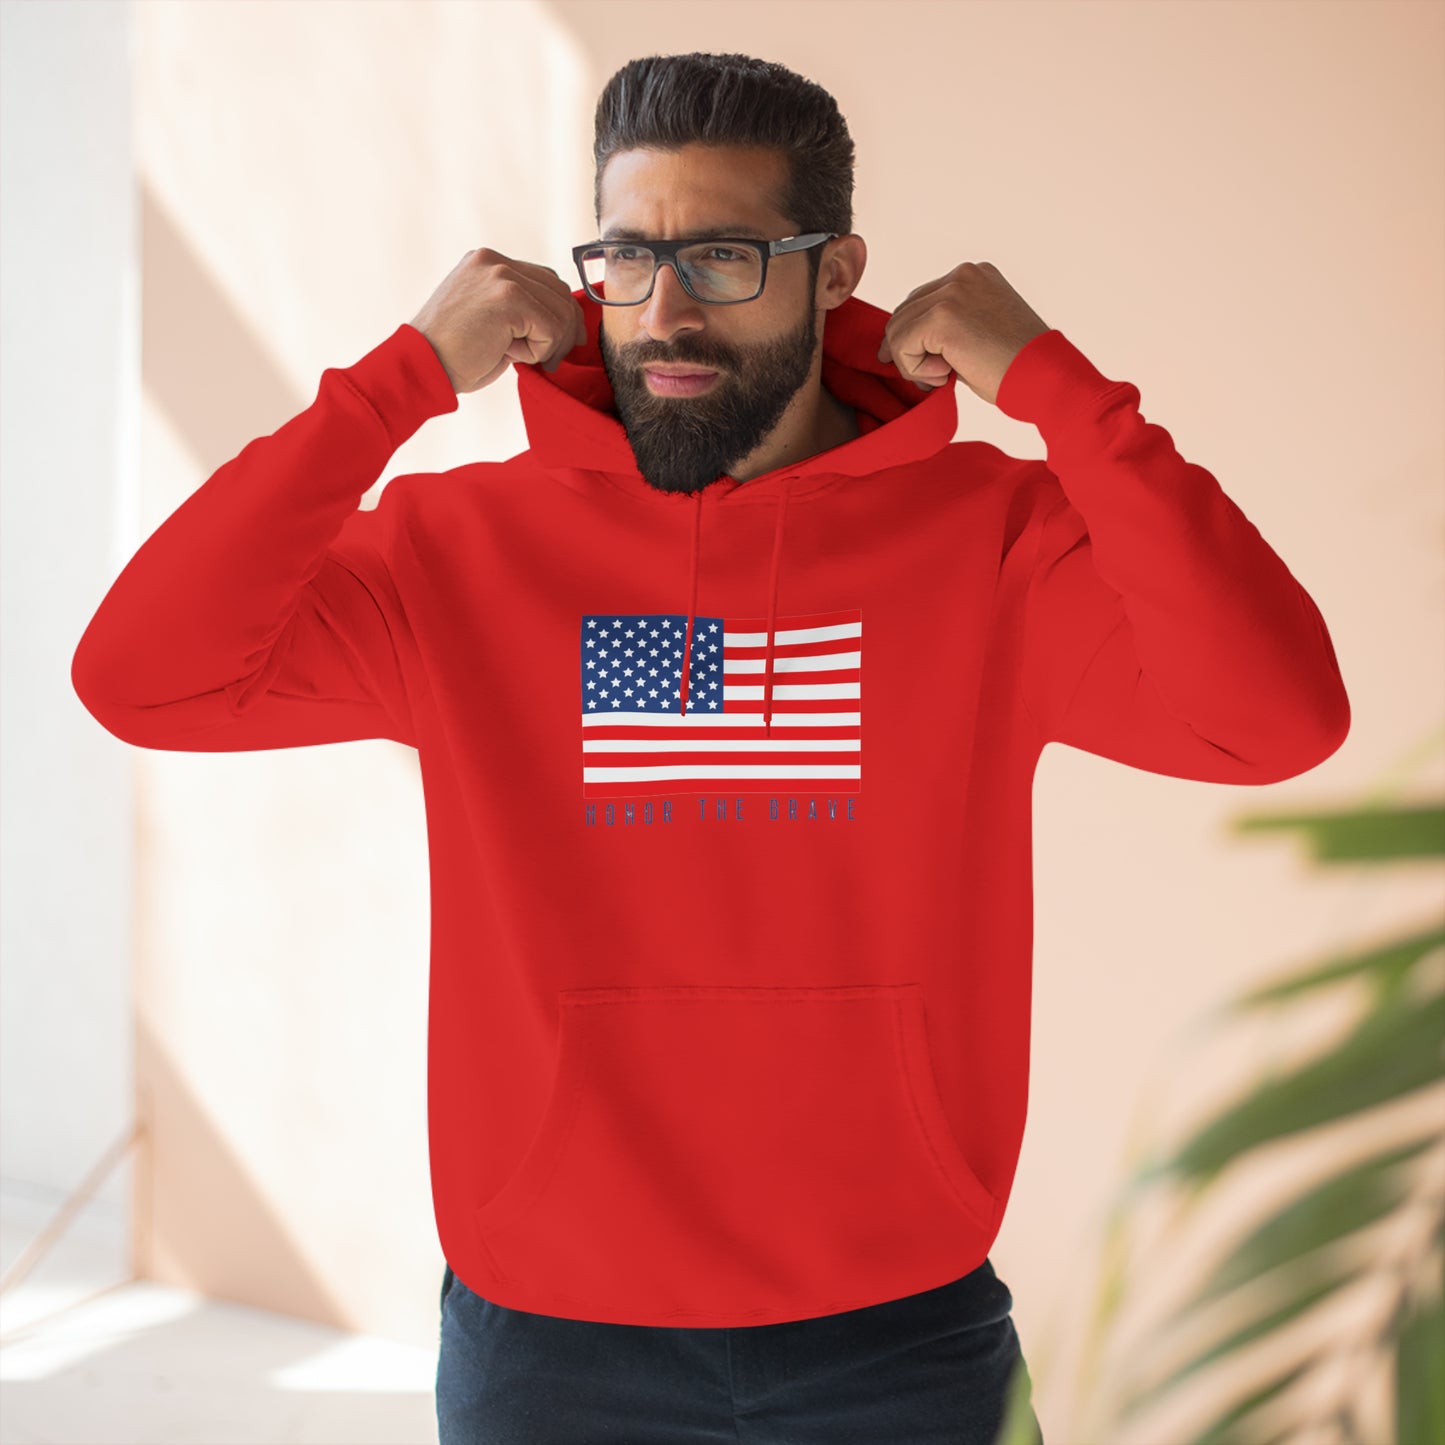 Honor The Brave -American Flag- Premium Pullover Hoodie